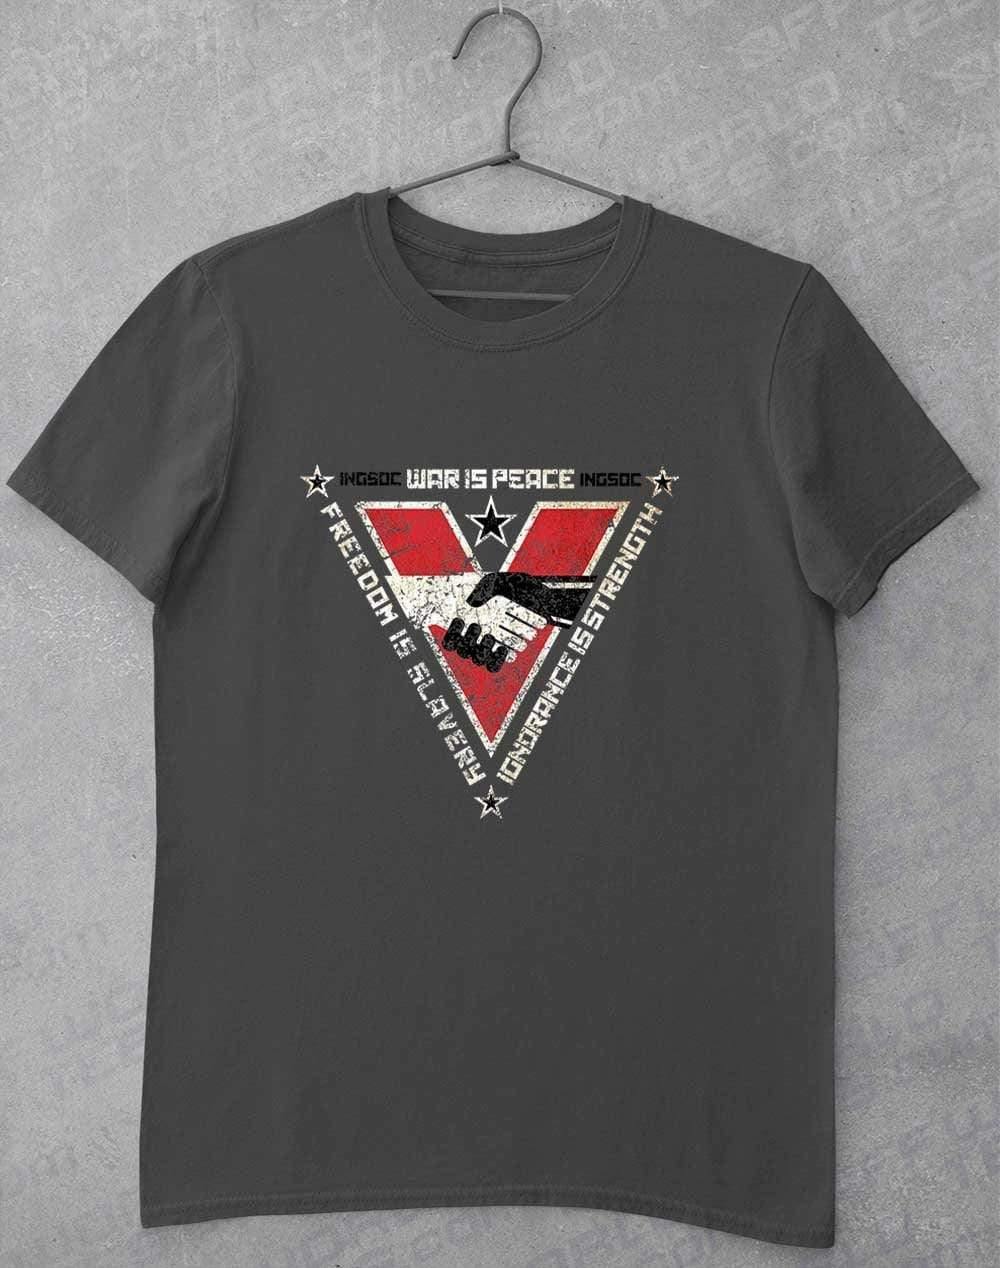 INGSOC Triangular Slogans T-Shirt S / Charcoal  - Off World Tees